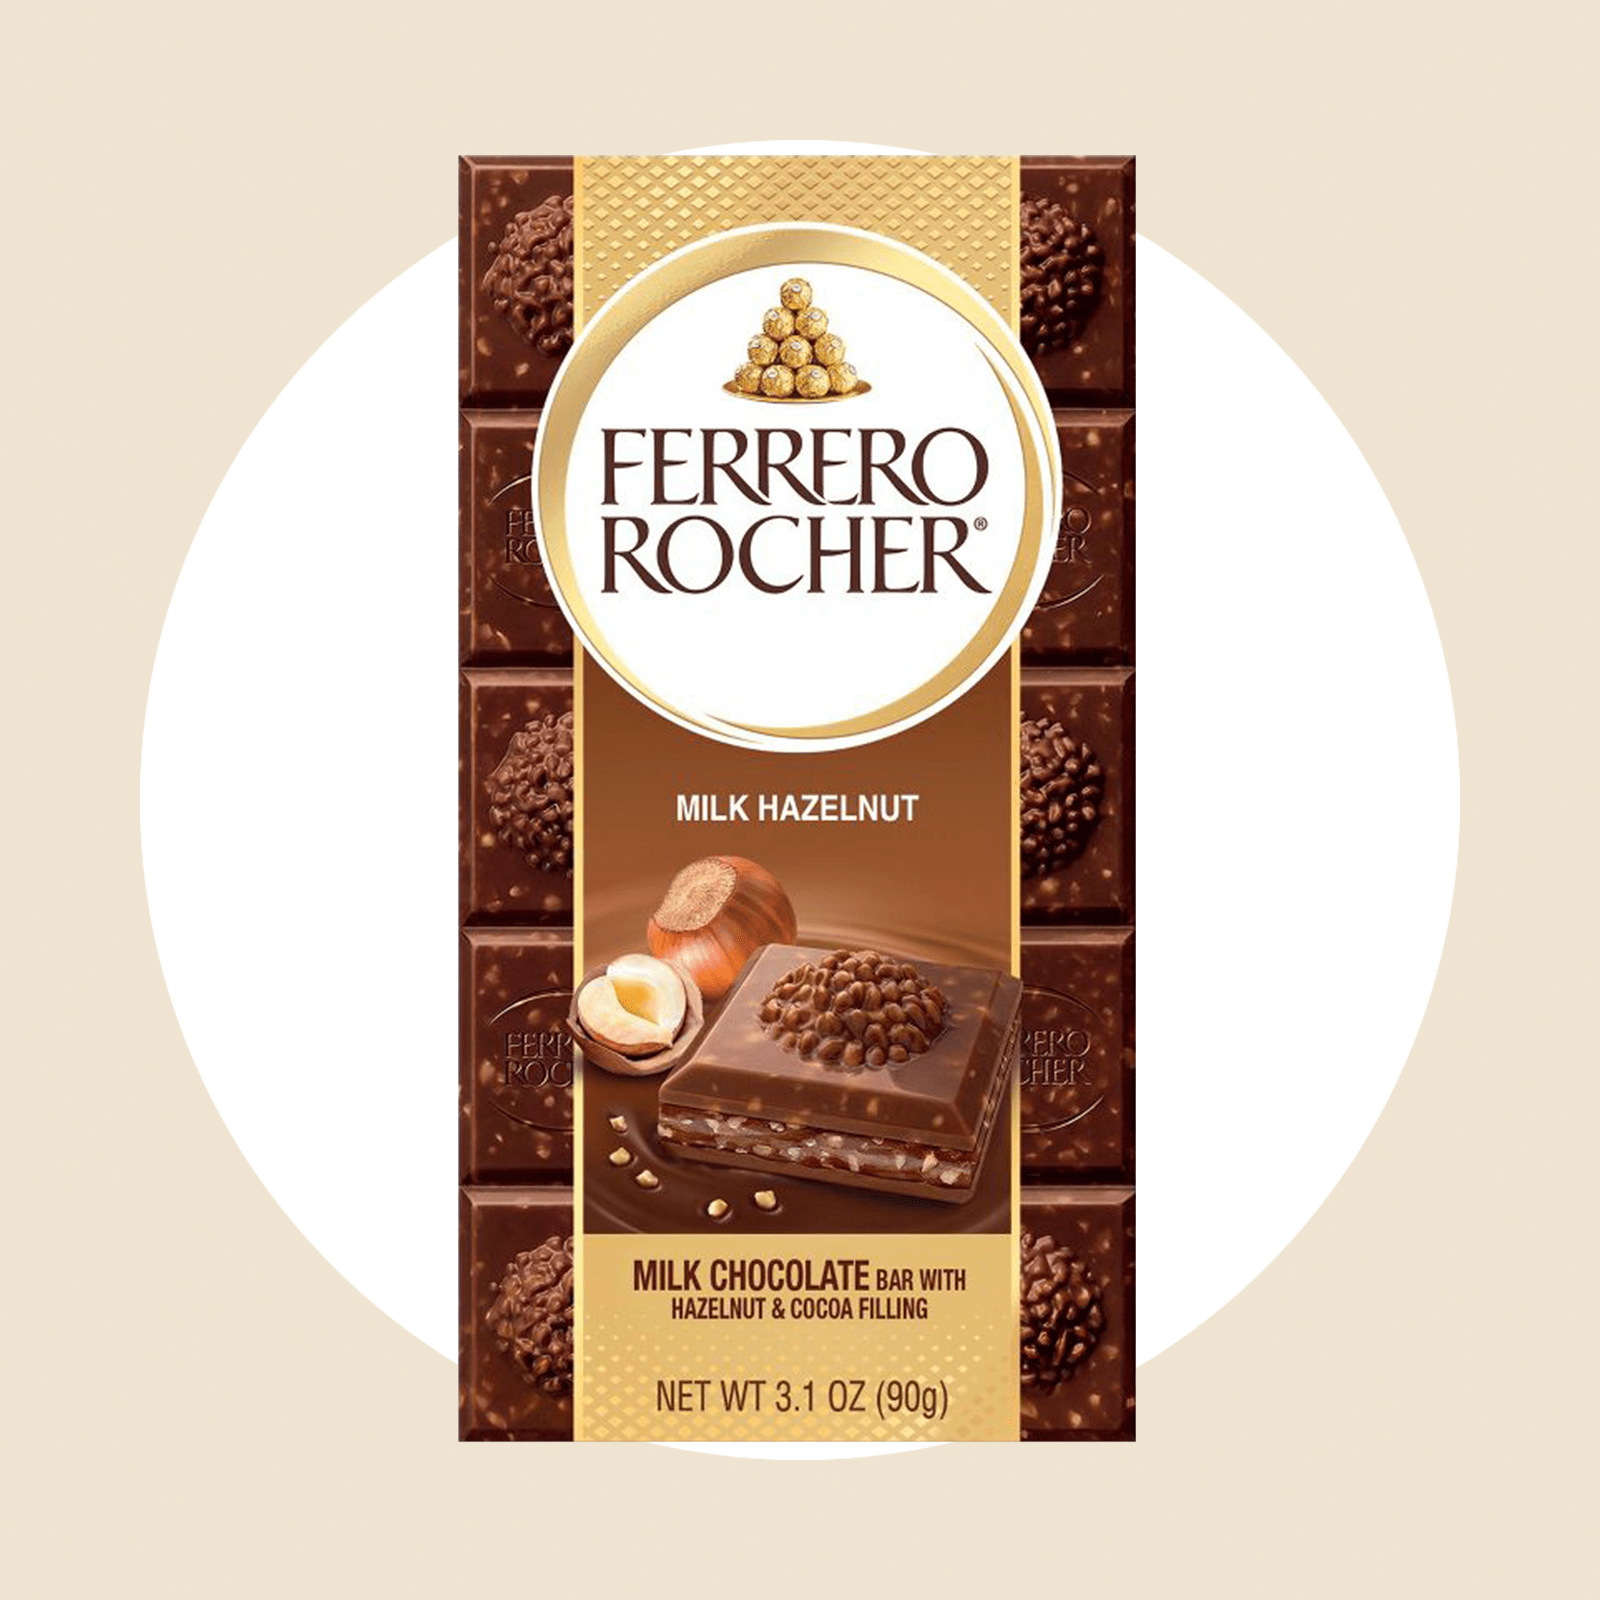 Ferrero Rocher Milk Chocolate Hazelnut Bar Ecomm Via Target.com